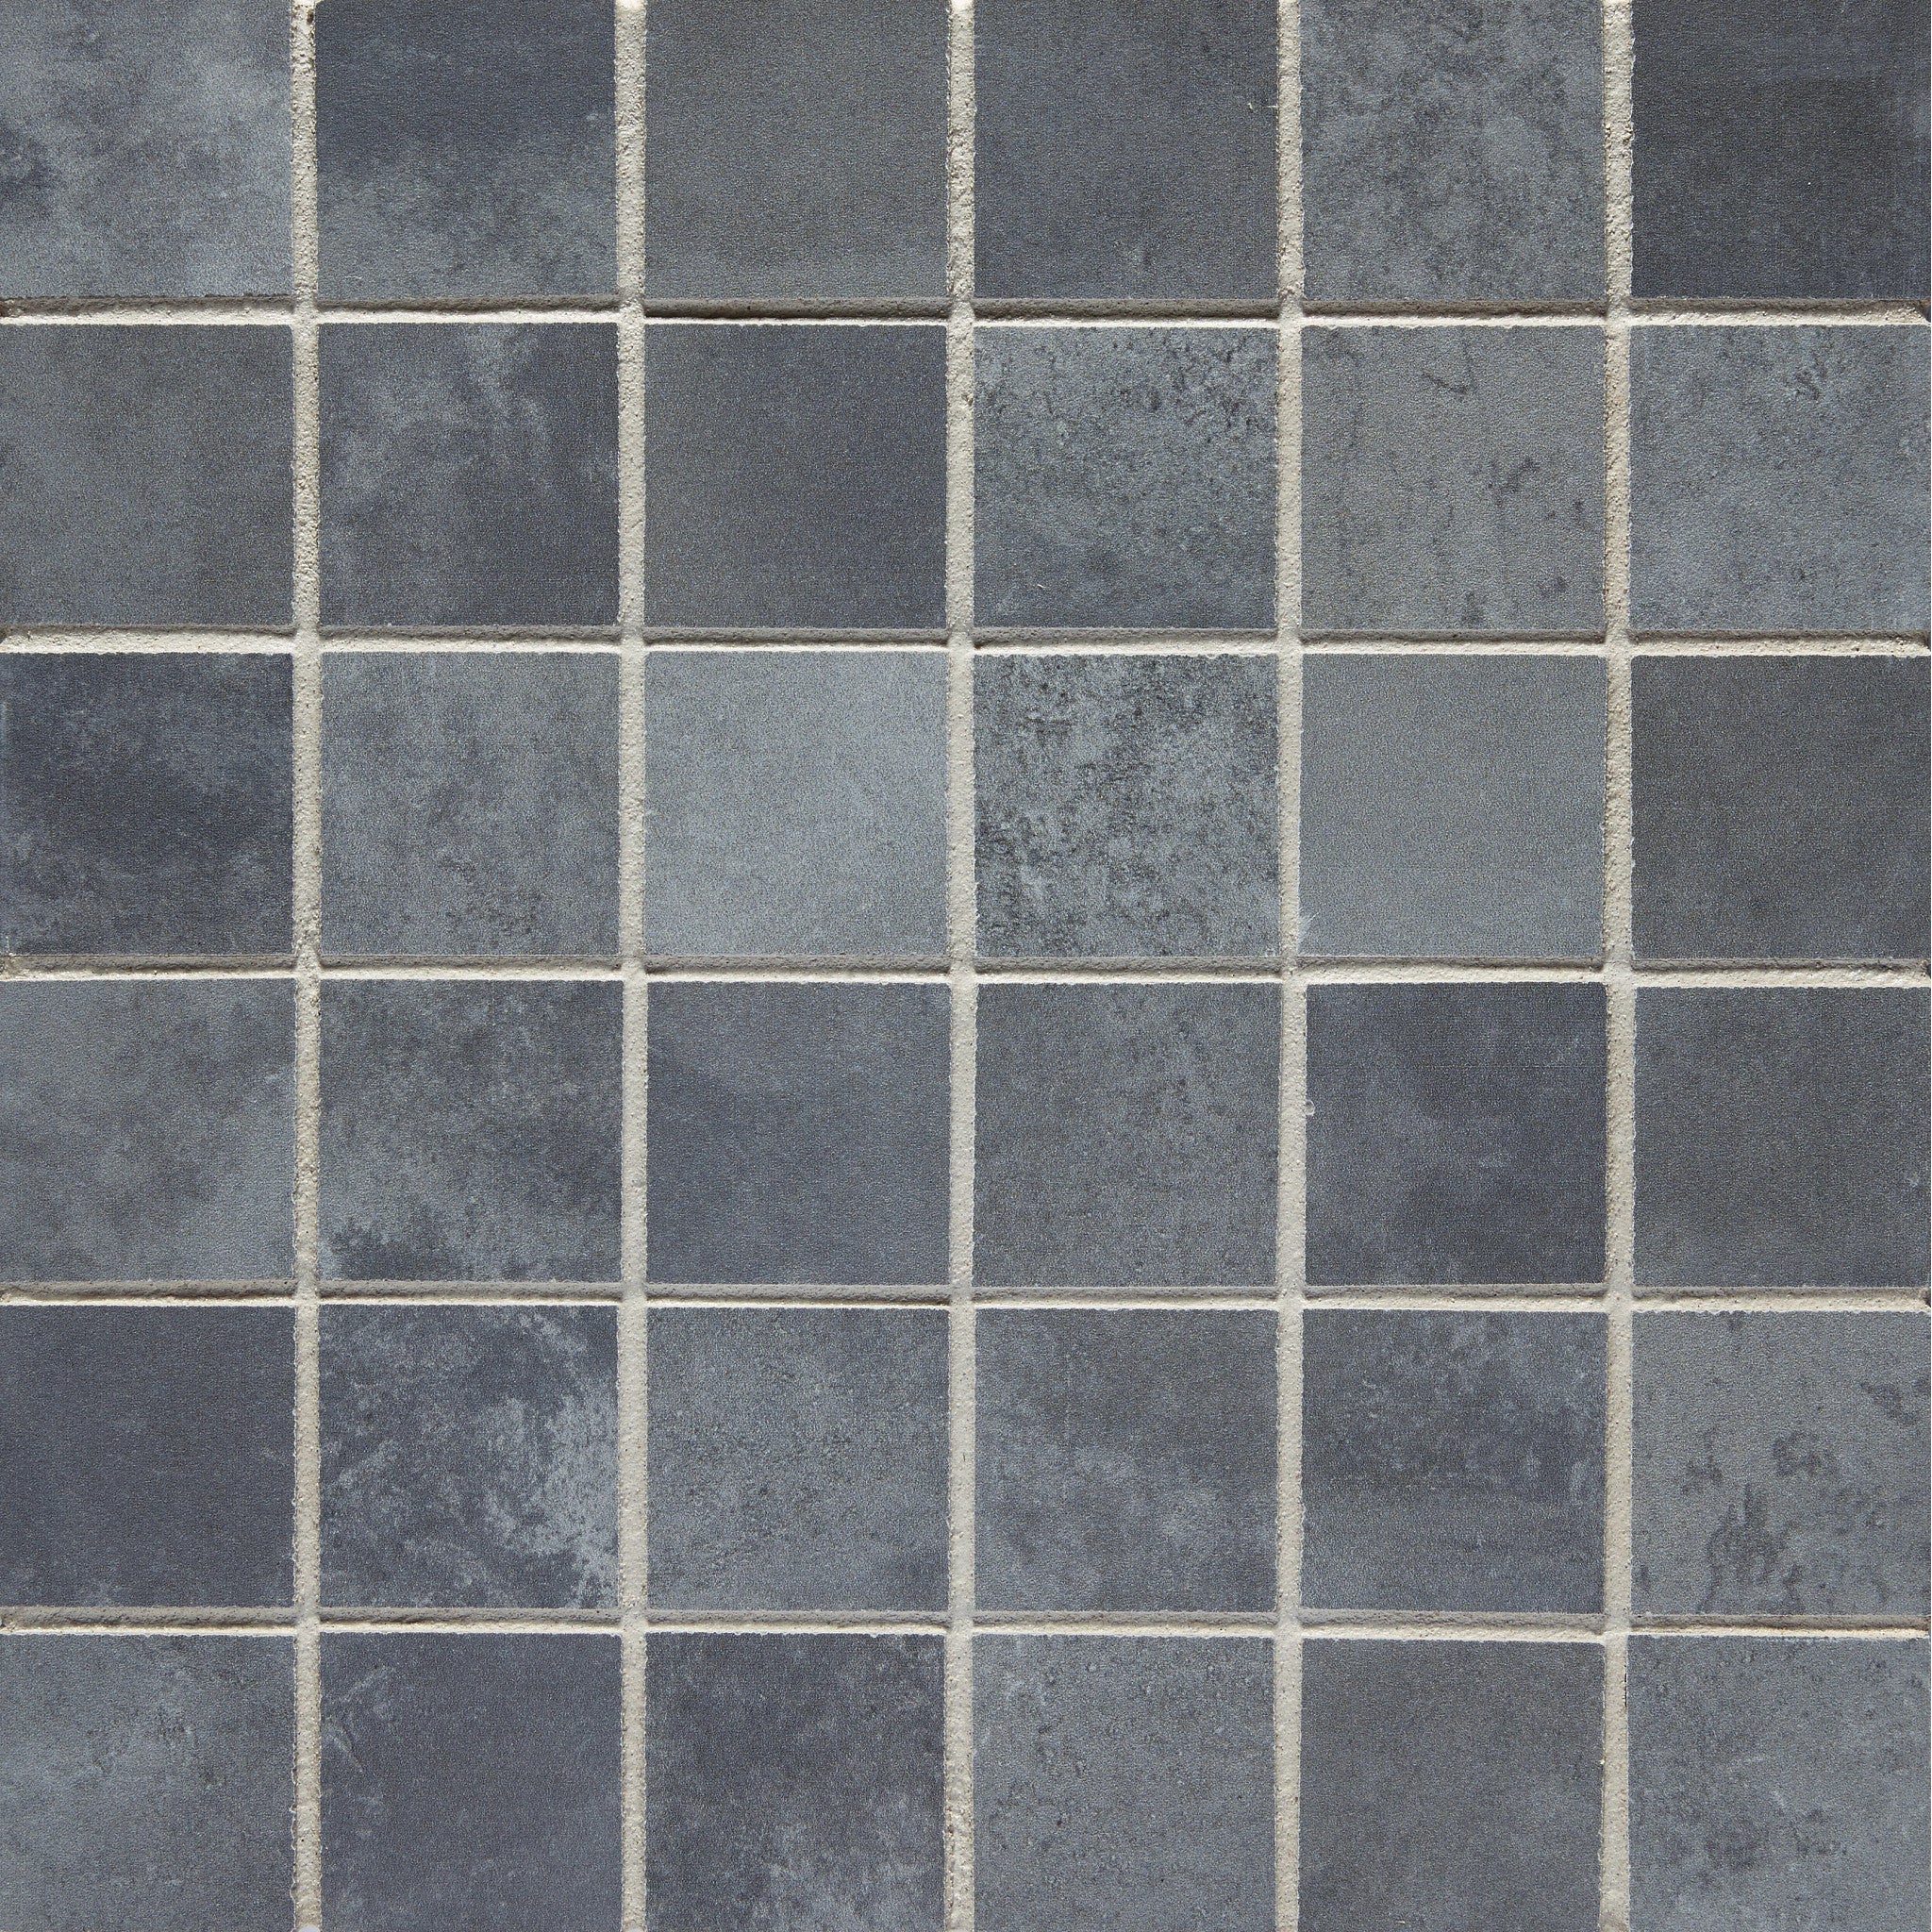 Using Modern Mosaic Tile in Bathroom Design - Arizona Tile